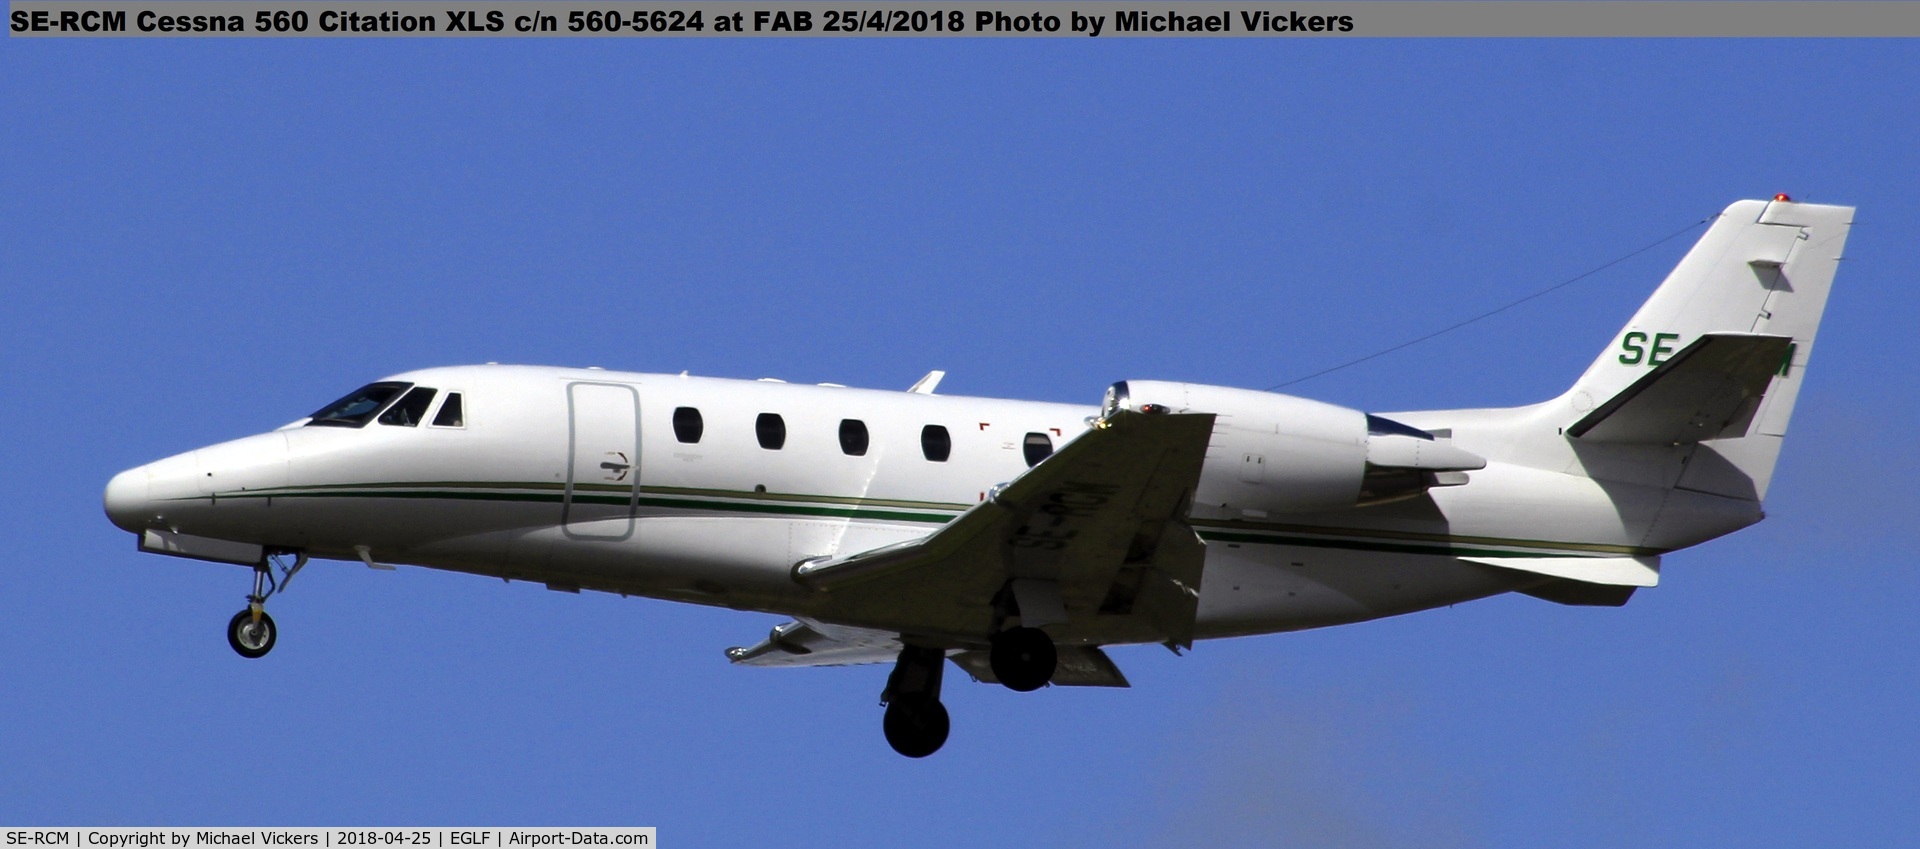 SE-RCM, 2006 Cessna 560XLS Citation Excel C/N 560-5624, Landing runway 24